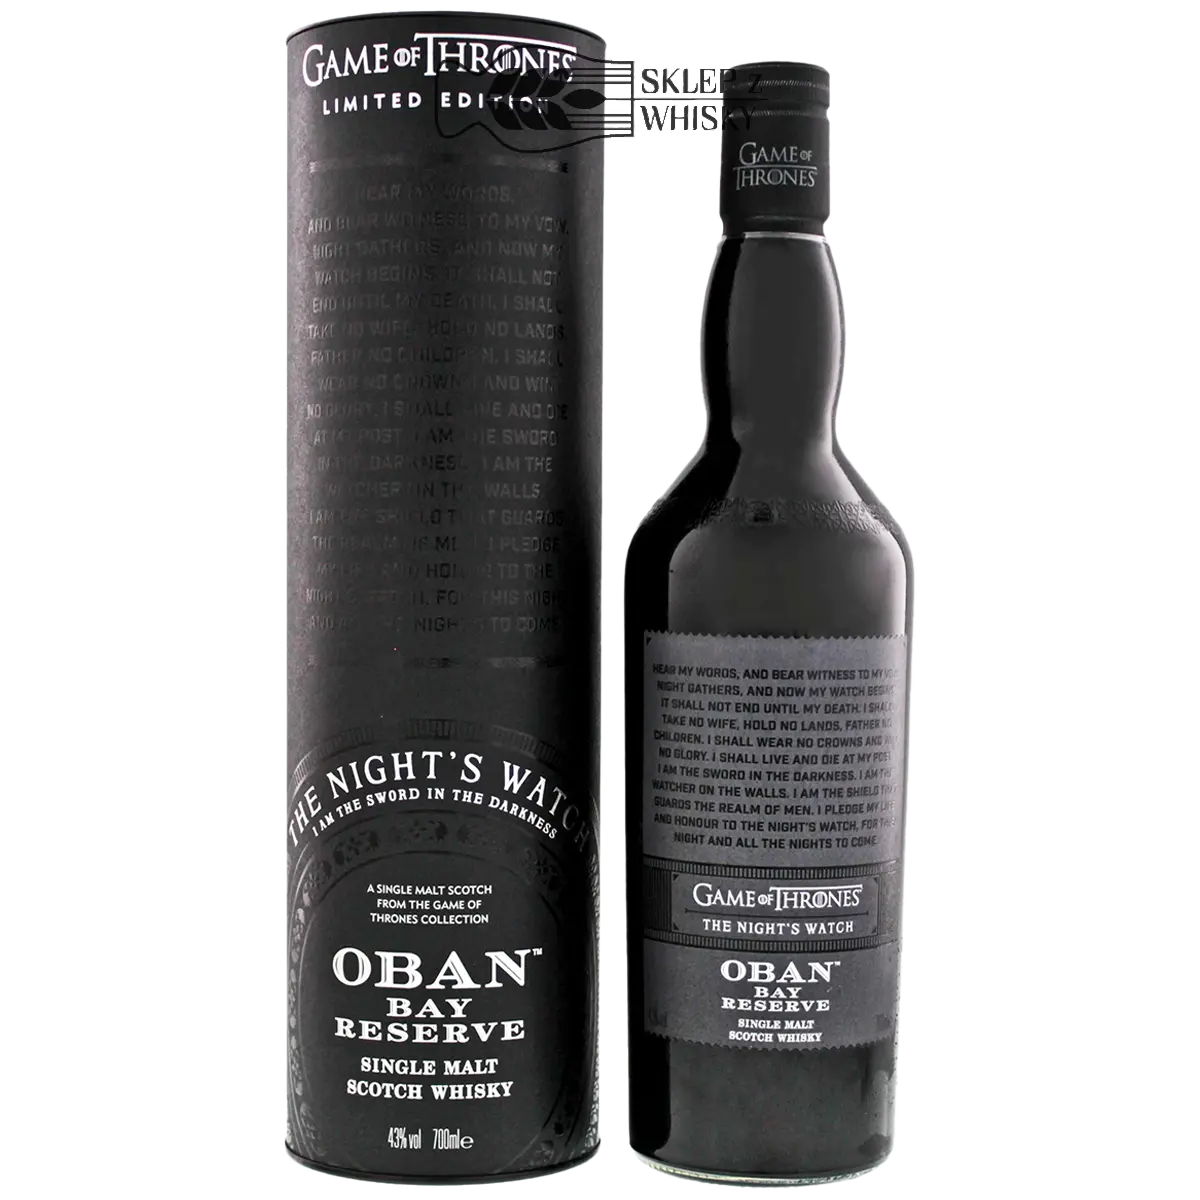 Oban Bay Reserve Game of Thrones Night's Watch Game of Thrones - szkocka whisky single malt z regionu Highlands, 700 ml, w pudełku